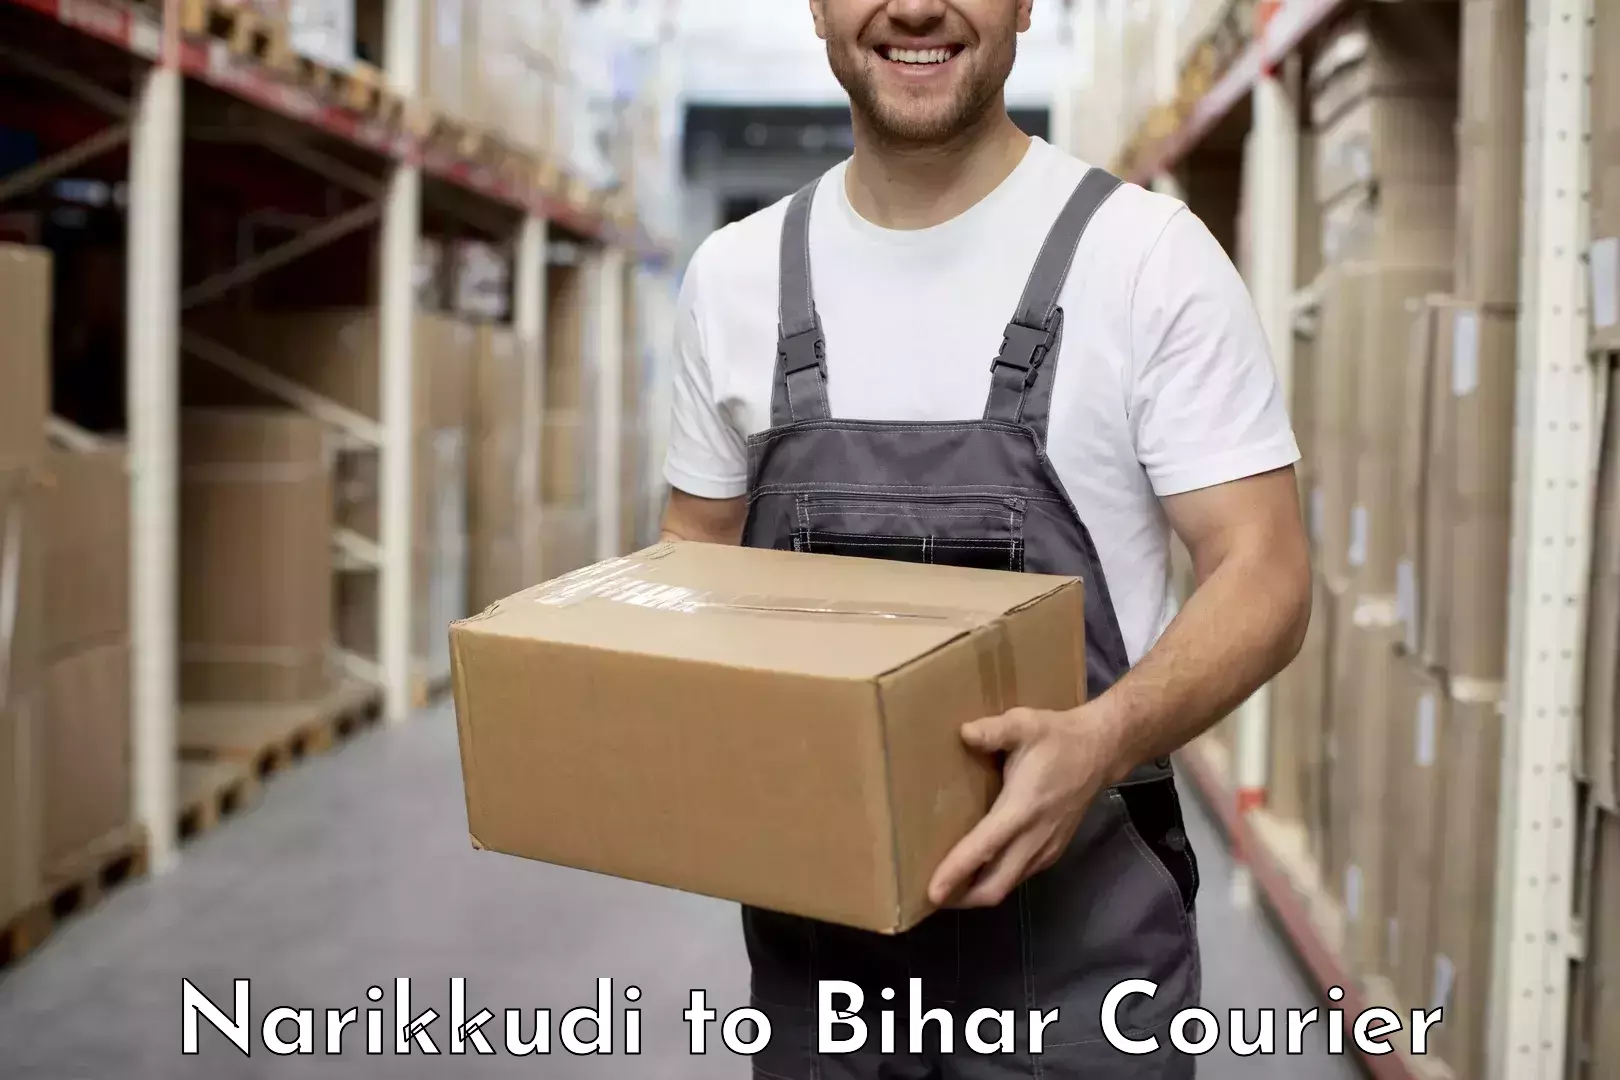 Expedited shipping methods Narikkudi to Aurangabad Bihar